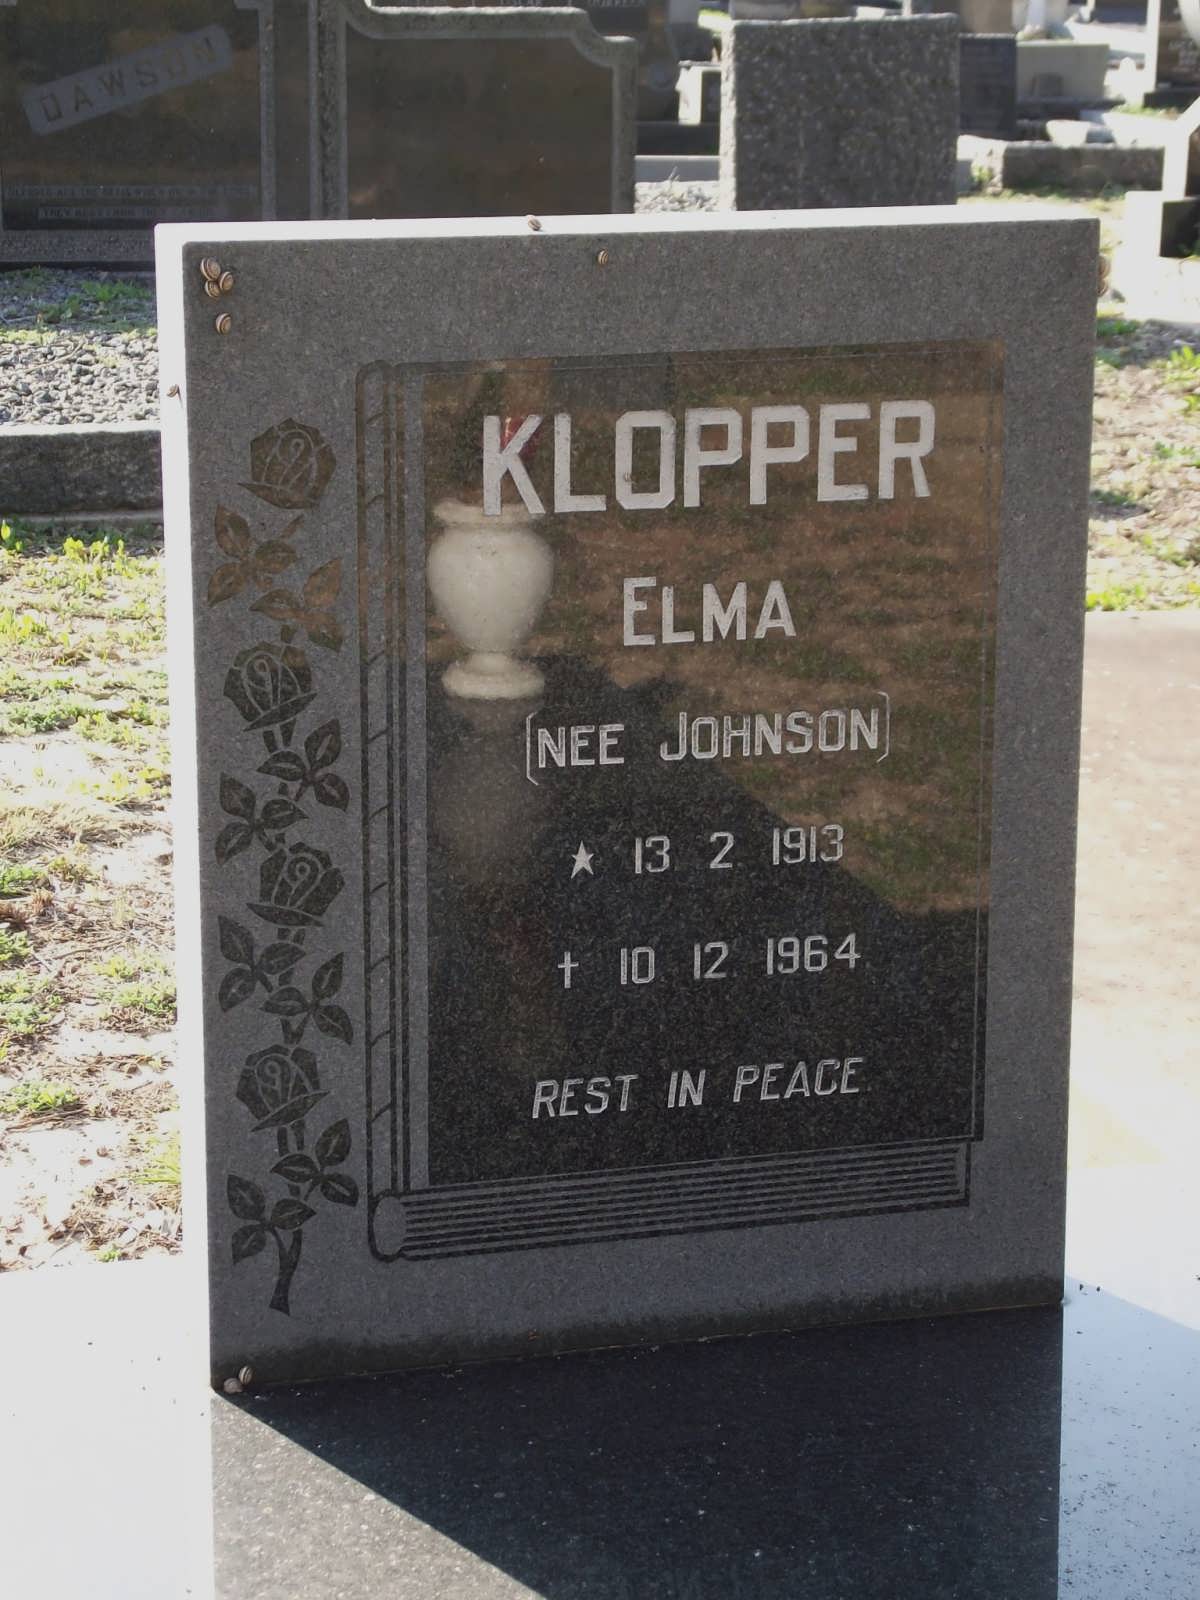 KLOPPER Elma nee JOHNSON 1913-1964